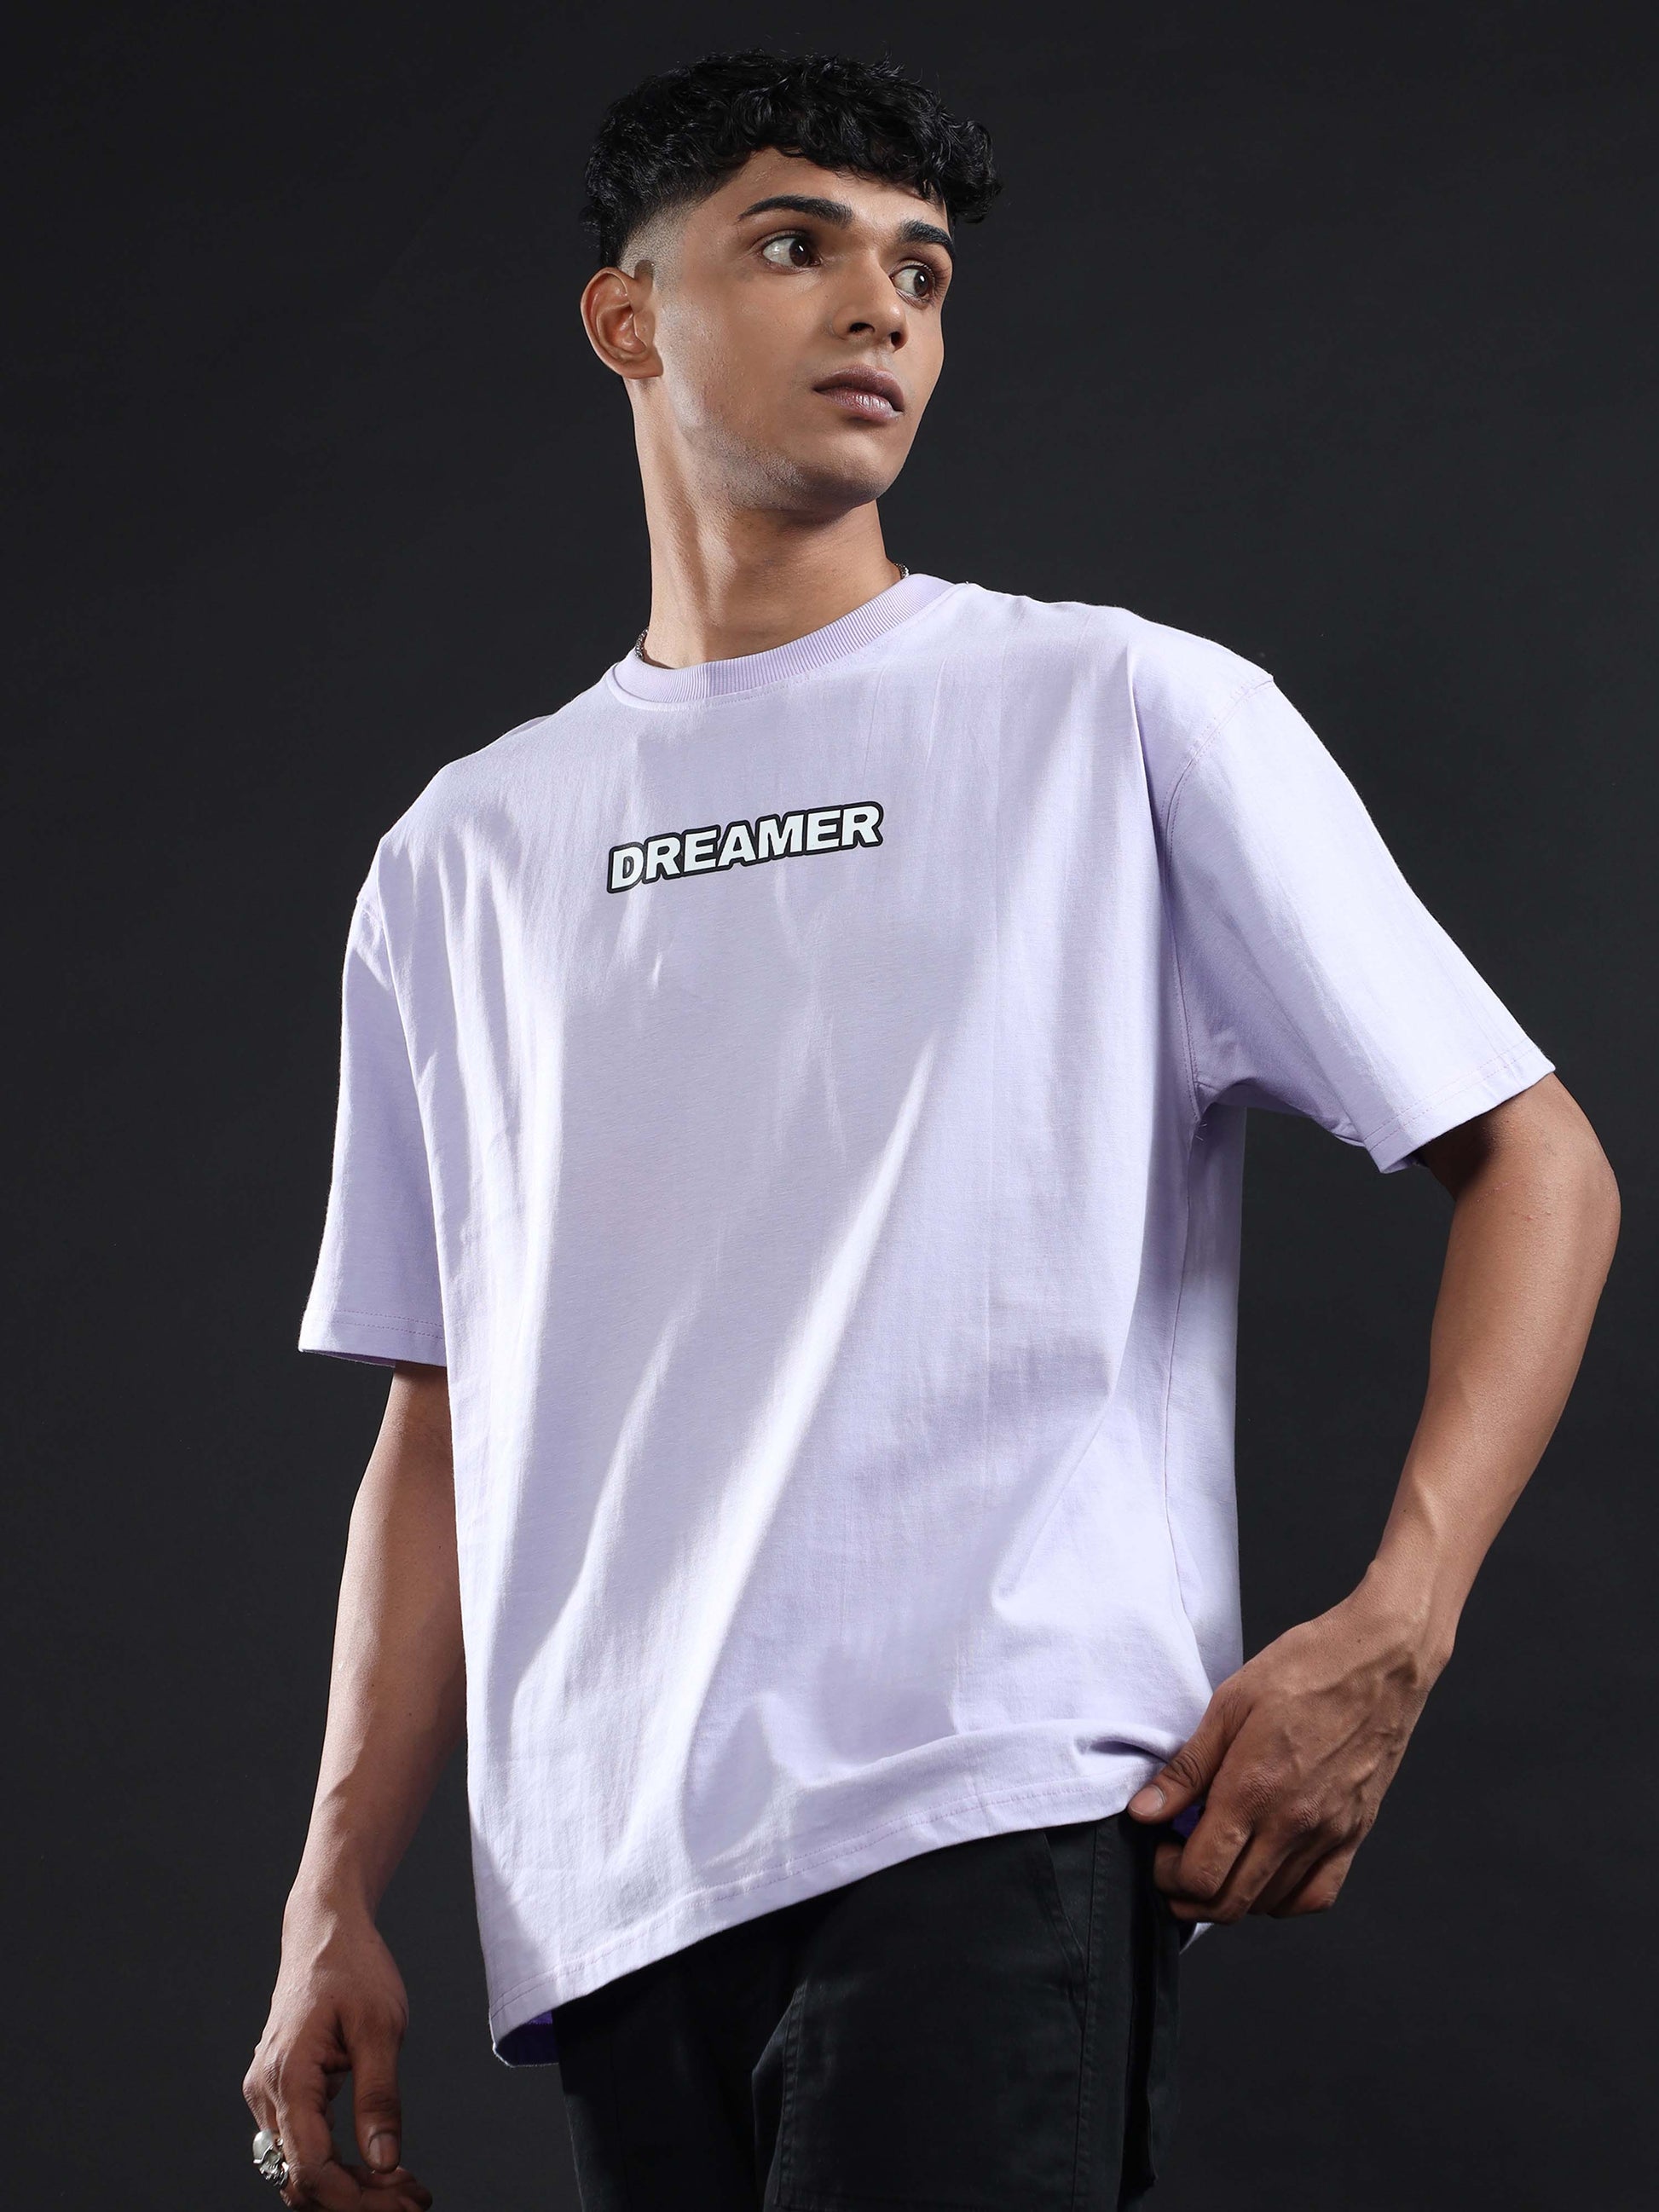 Unisex dreamer oversized lavender t-shirts.